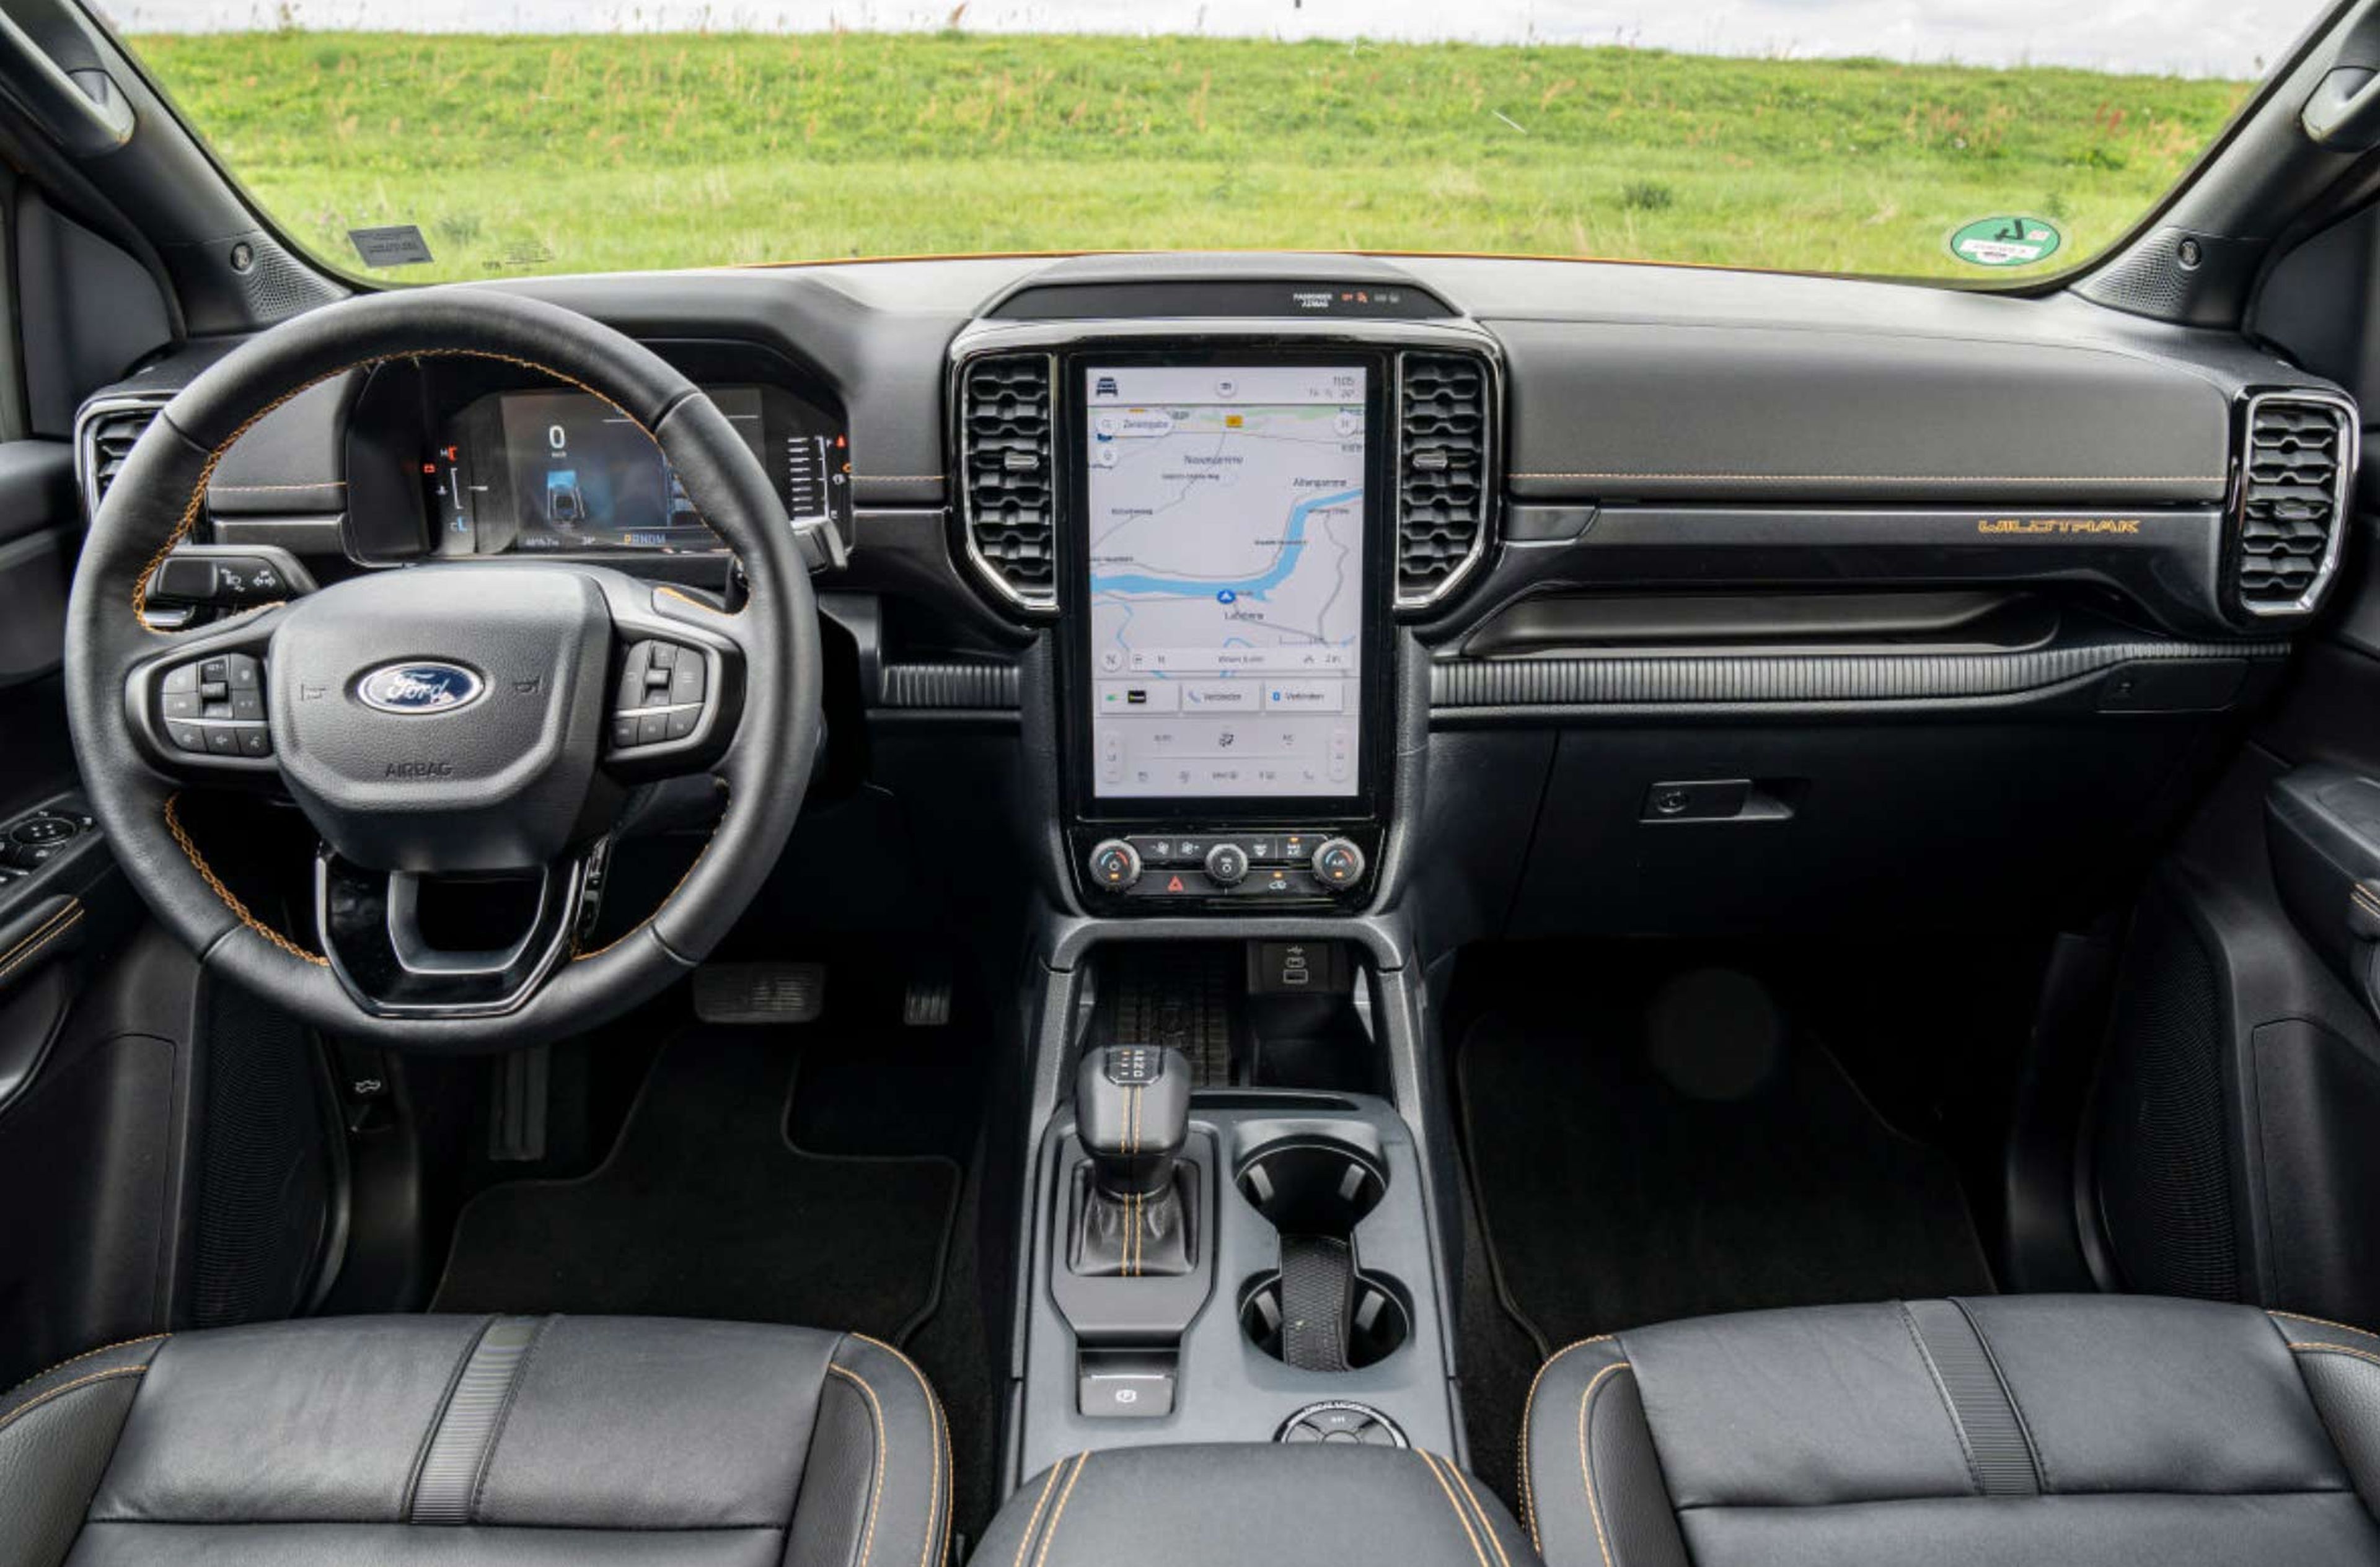 Comparativa: Ford Ranger vs Volkswagen Amarok cockpit 2